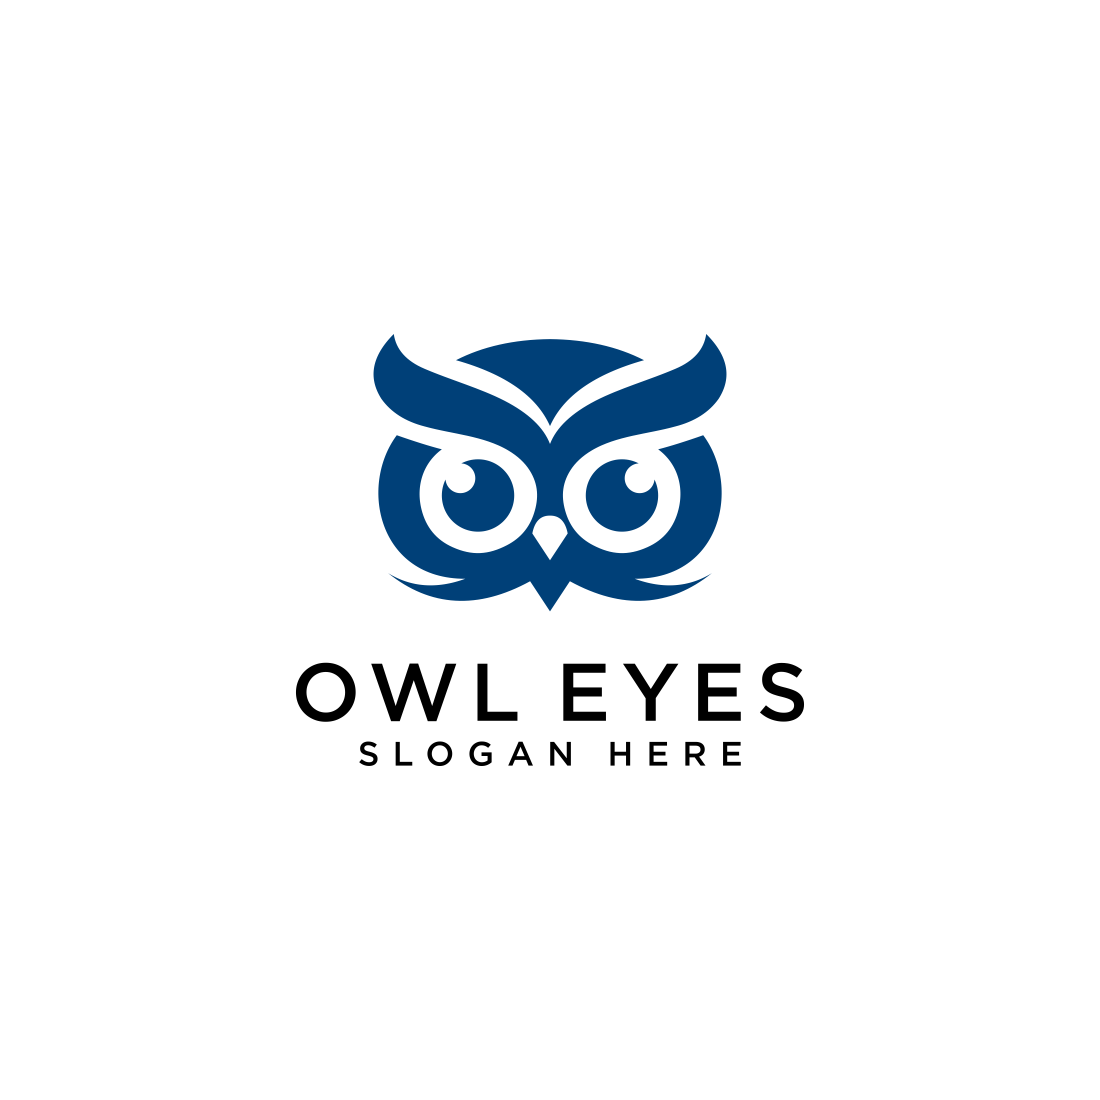 owl eyes logo vector design template cover image.